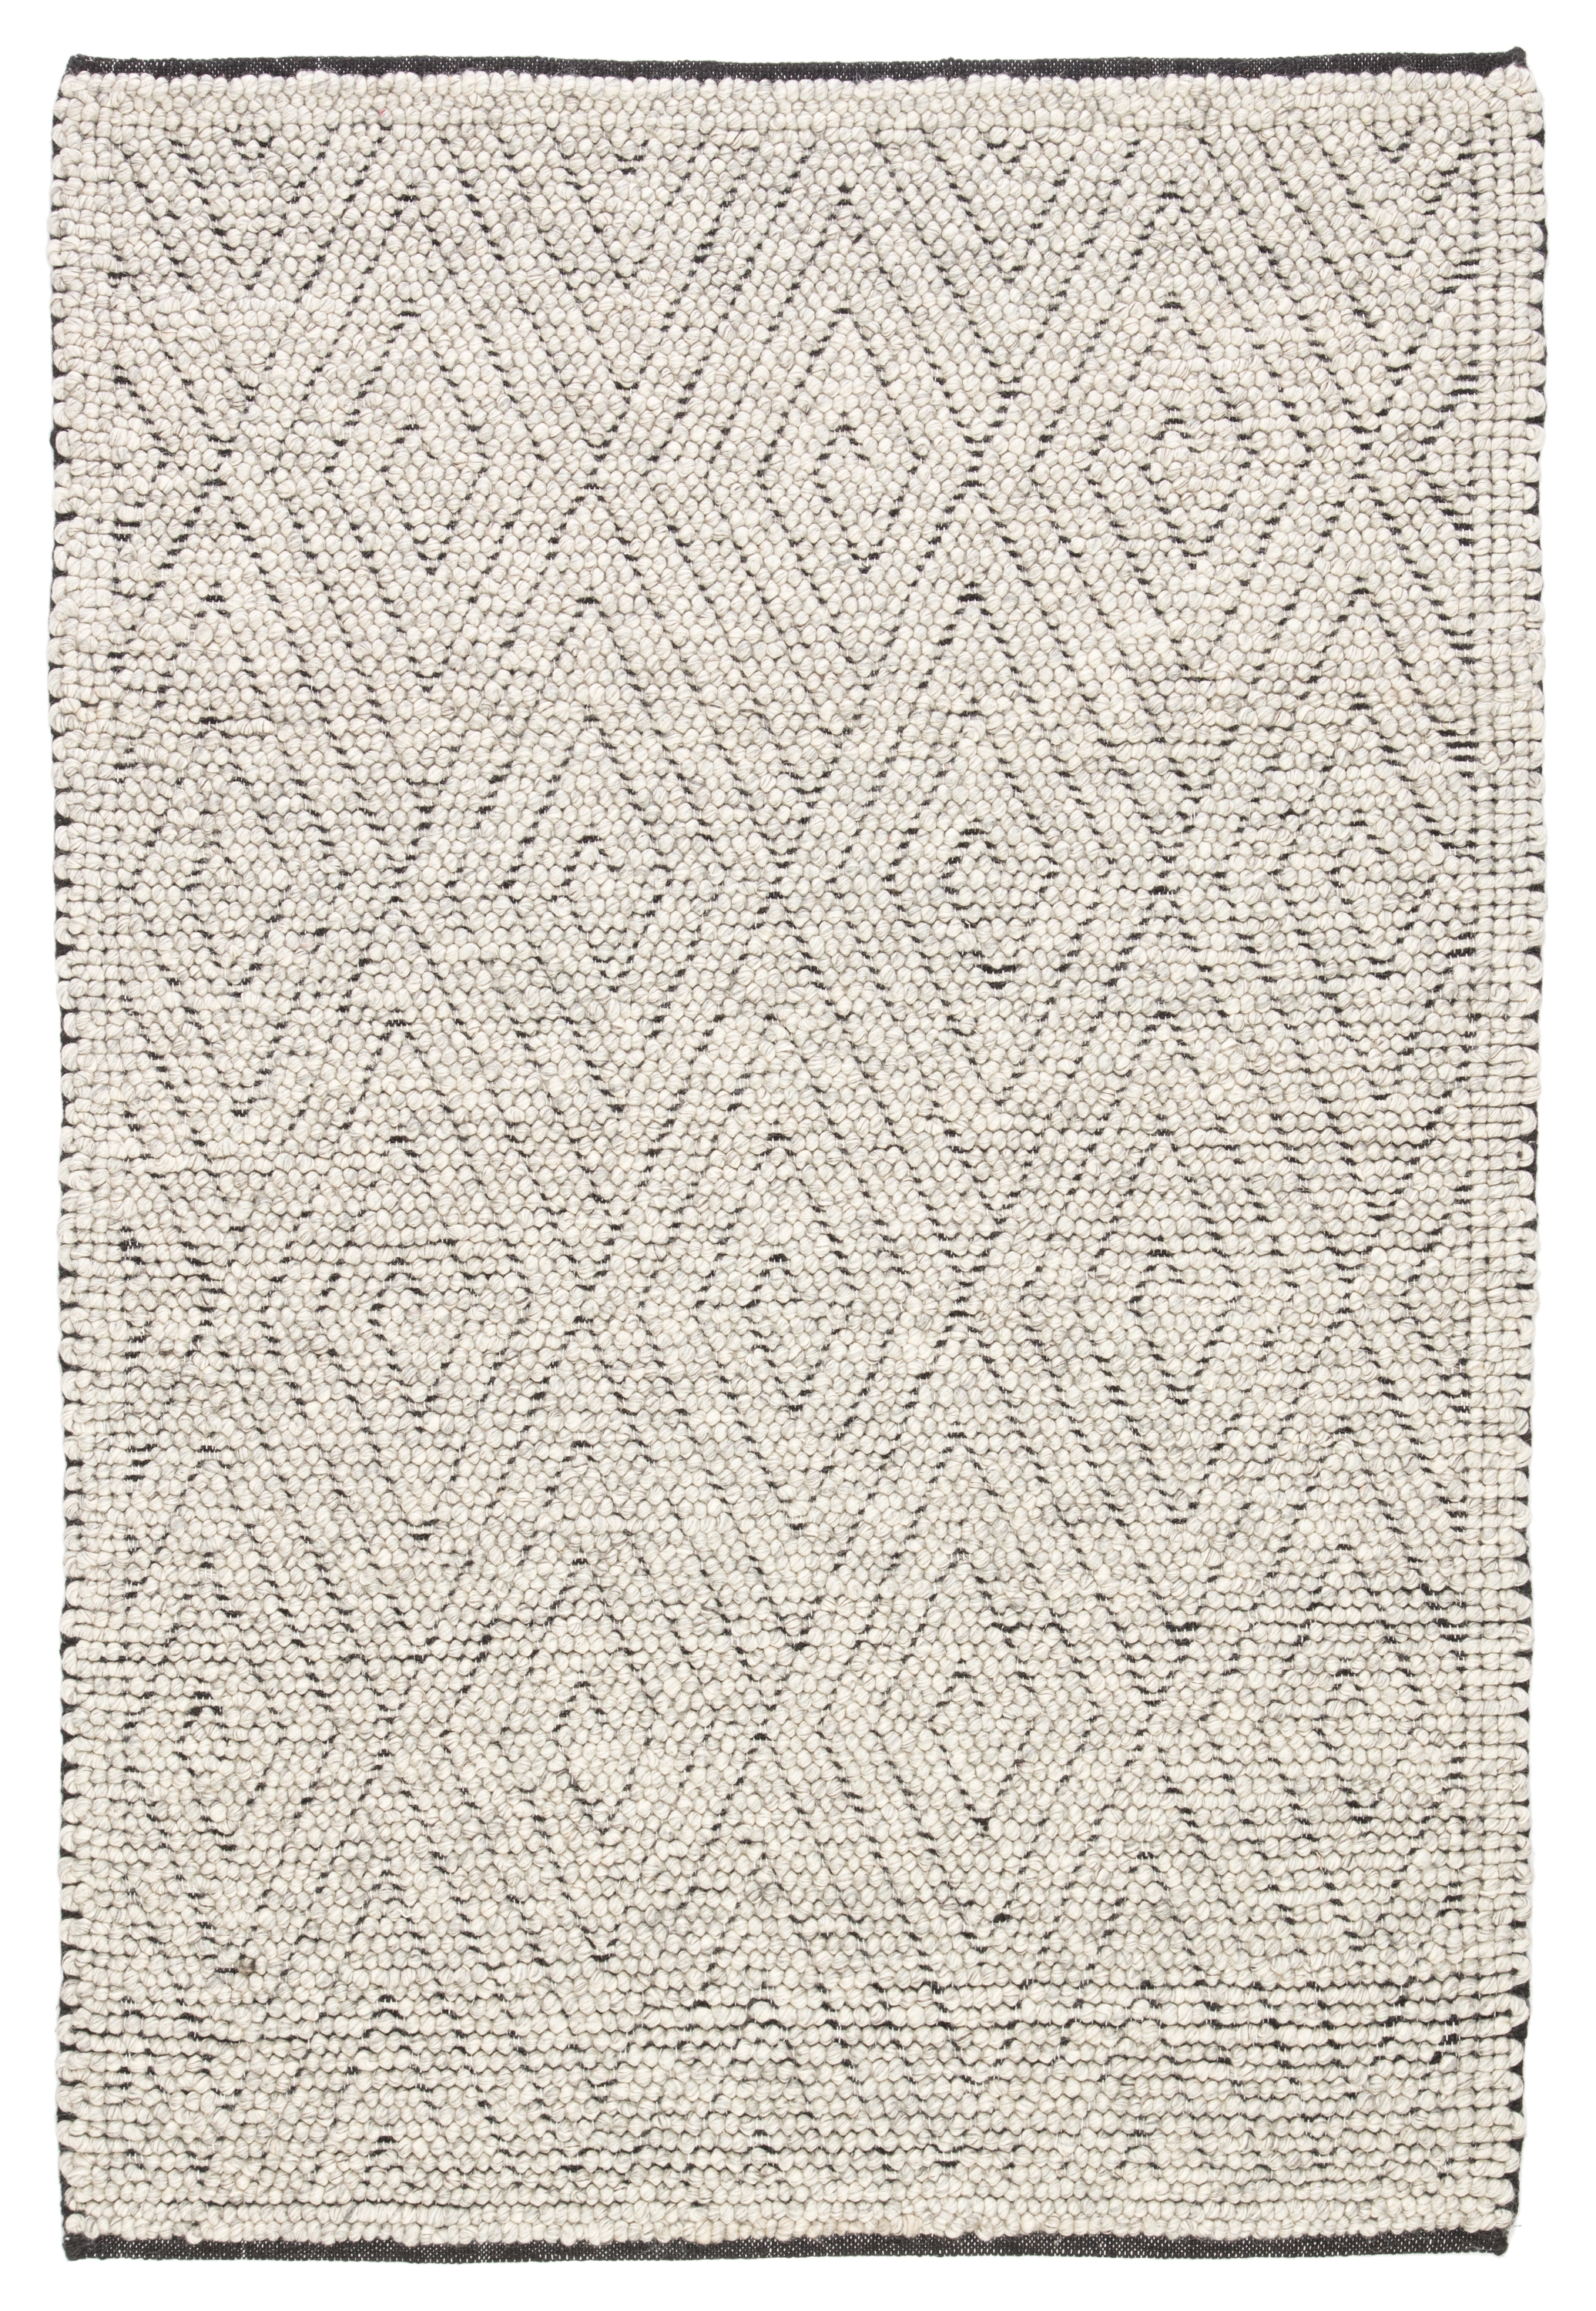 Kohinoor Handmade Geometric Gray/ Cream Area Rug (8' X 10') - Image 0